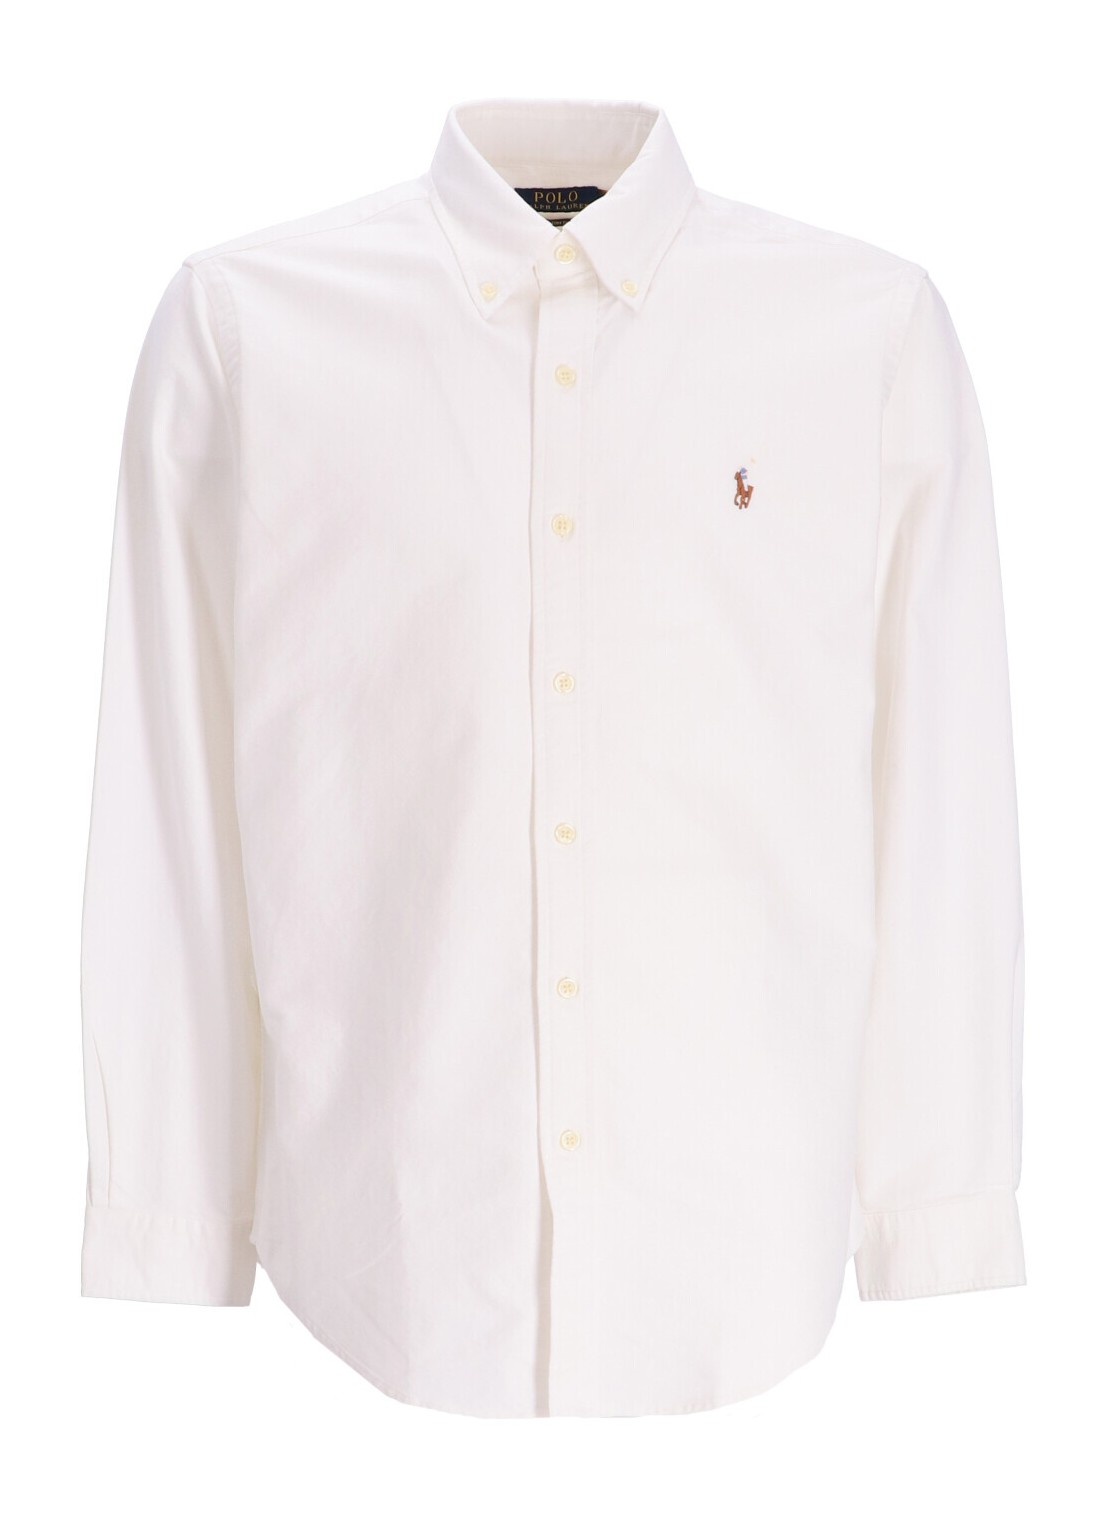 Camiseria polo ralph lauren shirt man cubdppcs-long sleeve-sport shirt 710792041001 white talla blan